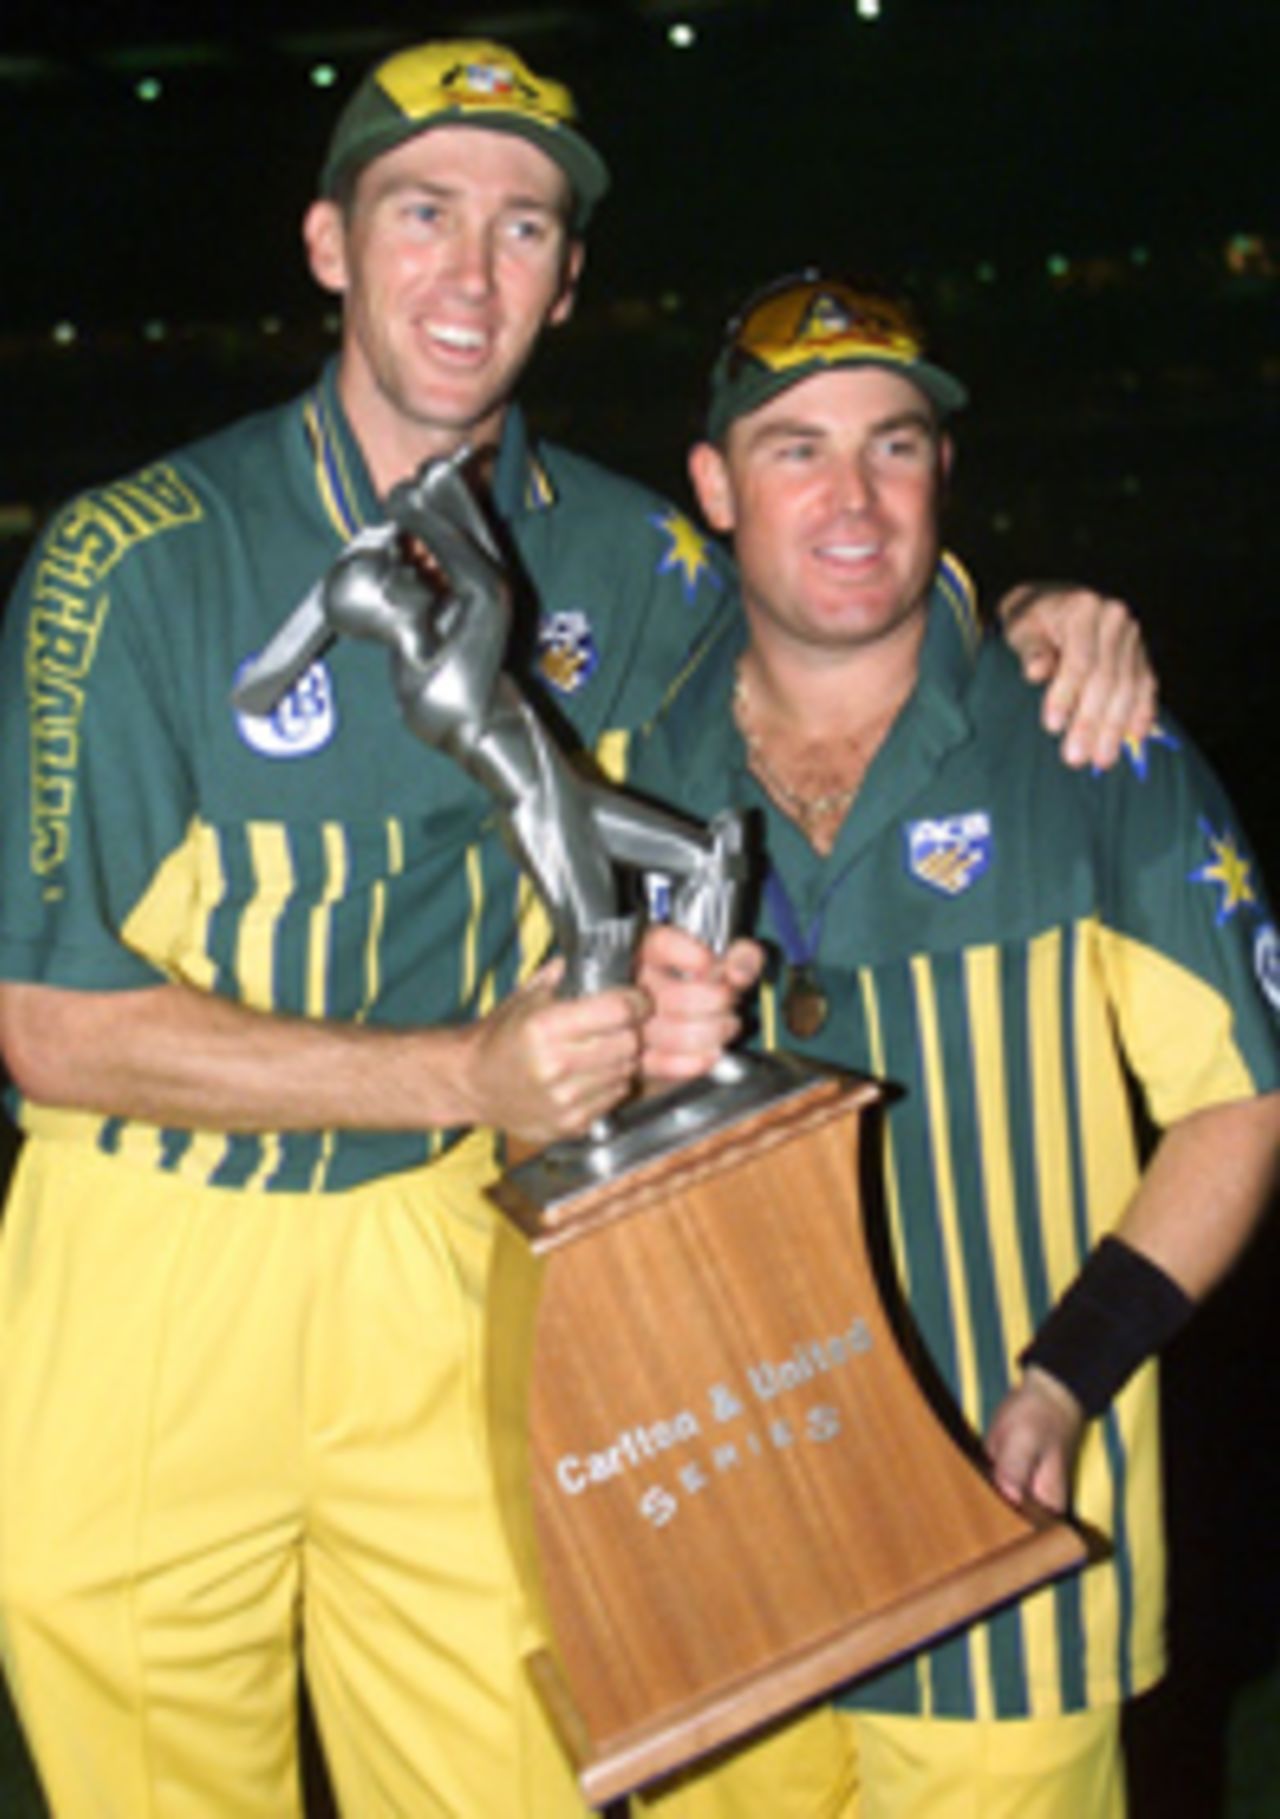 Shane Warne & Glenn McGrath with the Carlton & United Series Trophy, 1998/99